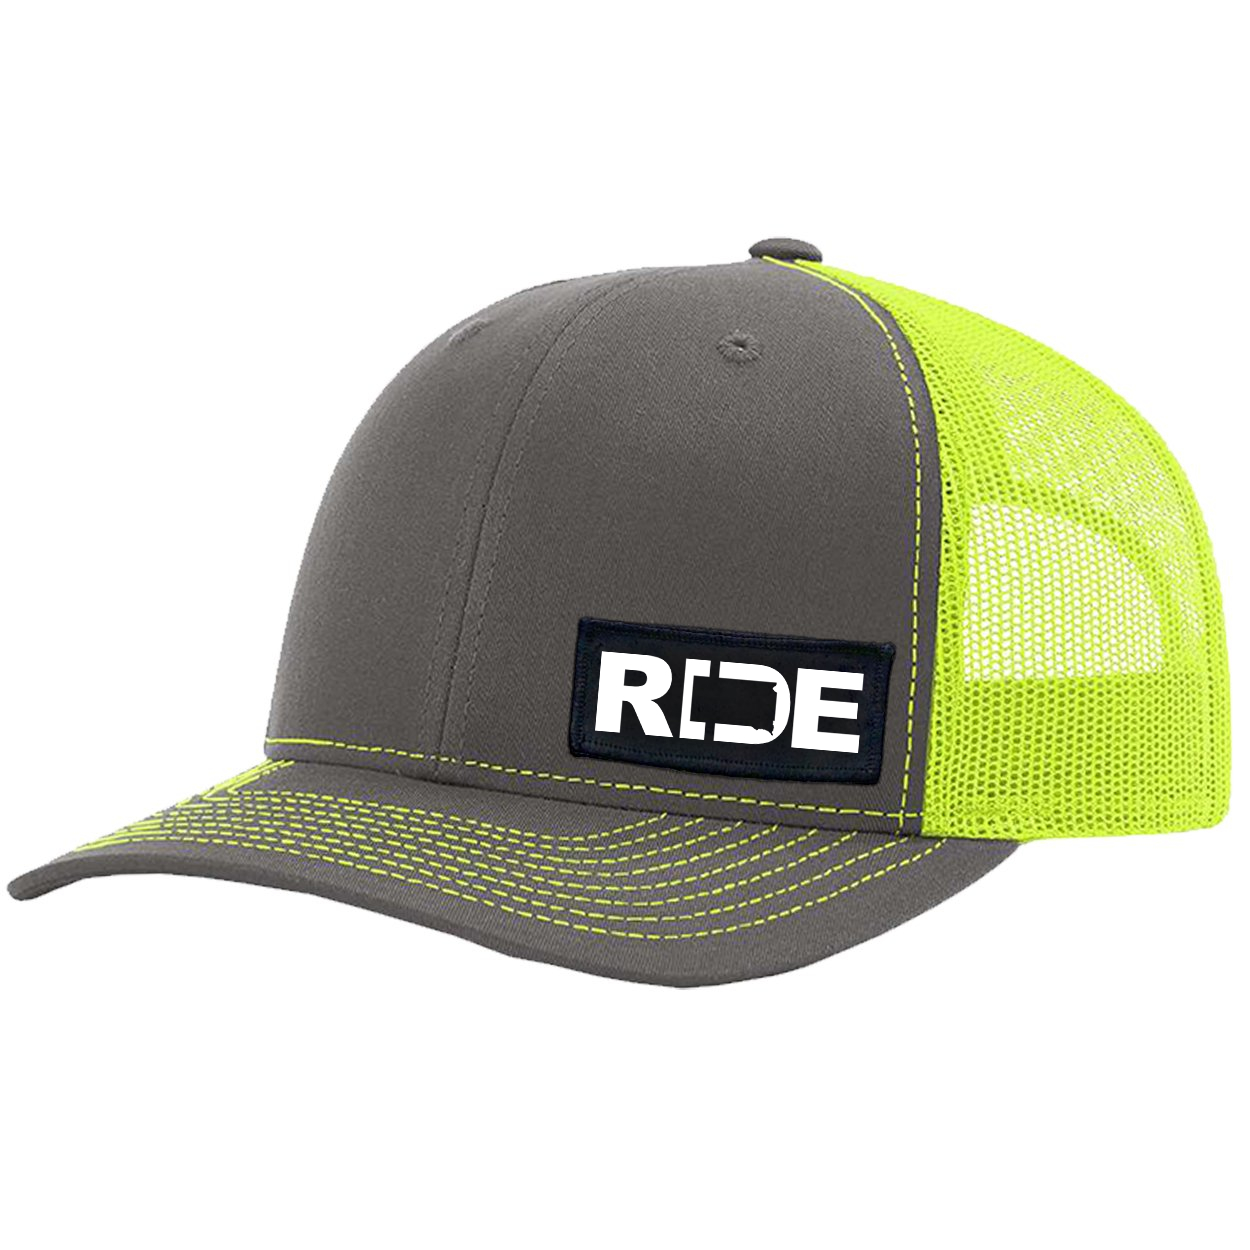 Ride South Dakota Night Out Woven Patch Snapback Trucker Hat Charcoal/Neon Yellow (White Logo)